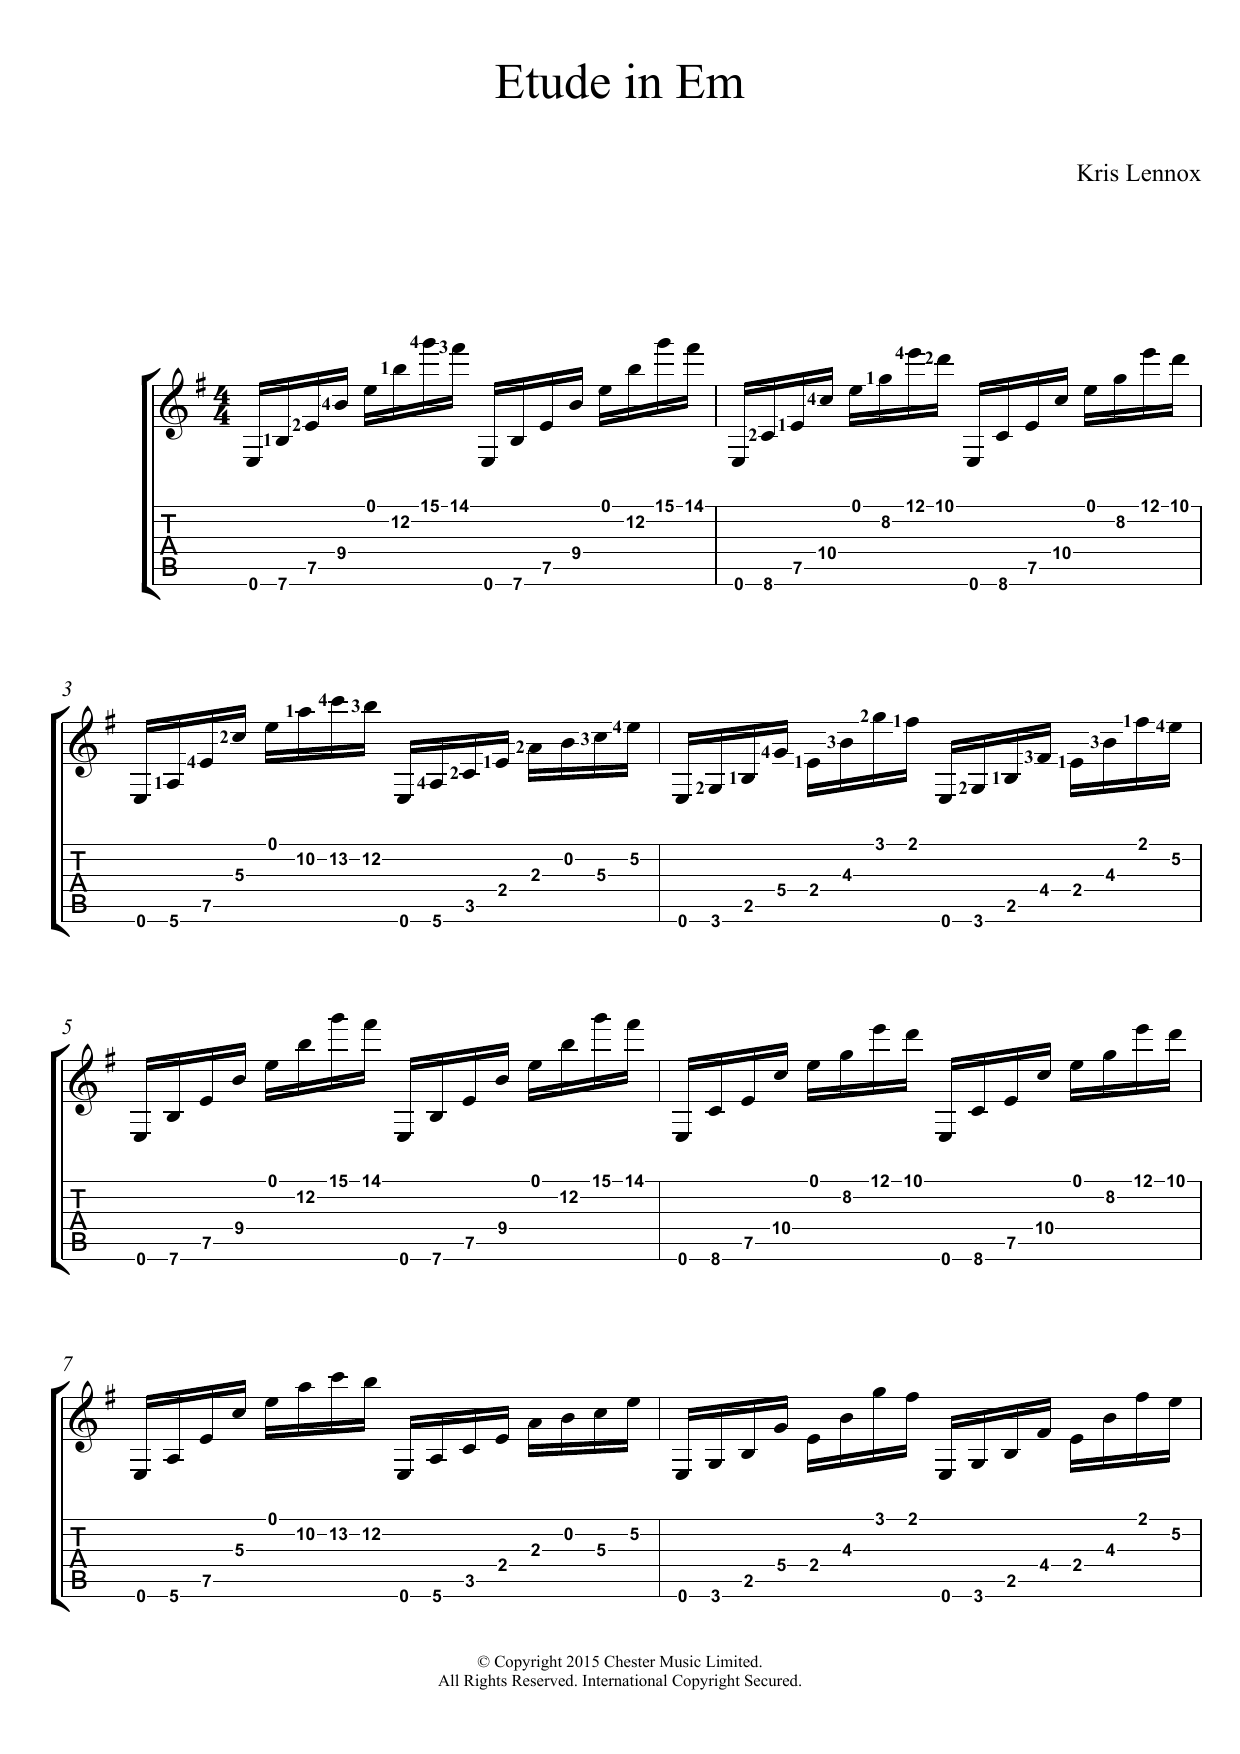 Kris Lennox Etude In Em Sheet Music Notes & Chords for Guitar Tab - Download or Print PDF